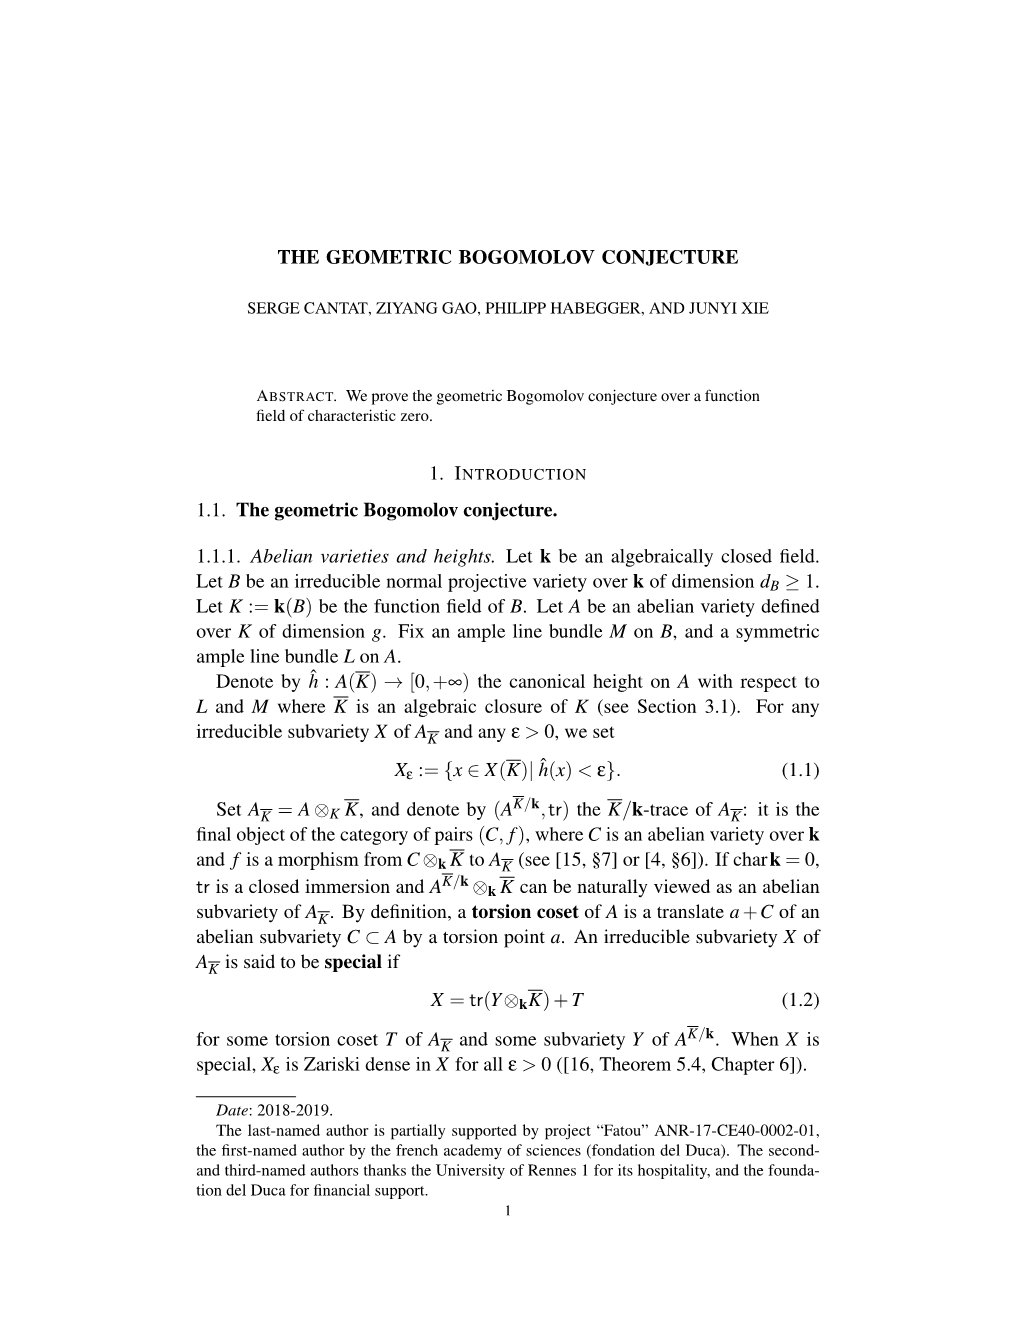 THE GEOMETRIC BOGOMOLOV CONJECTURE 1.1. the Geometric Bogomolov Conjecture. 1.1.1. Abelian Varieties and Heights. Let K Be an Al